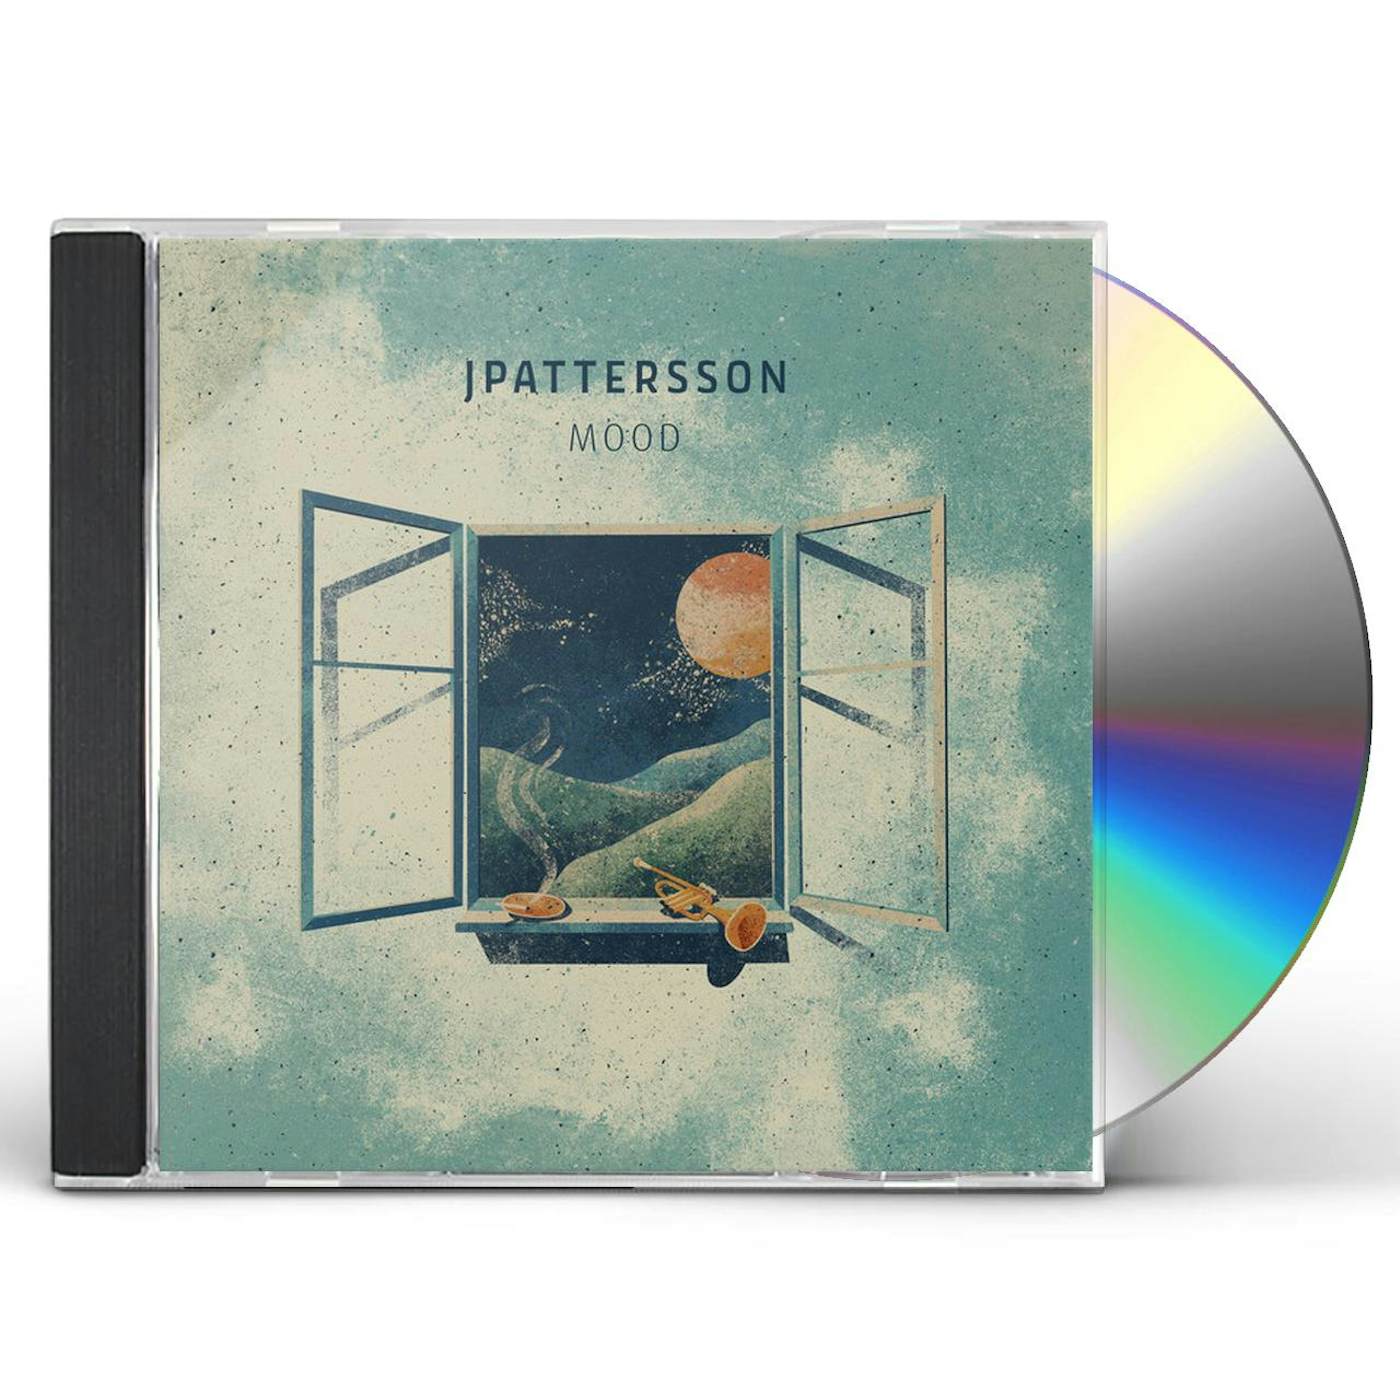 JPattersson MOOD CD